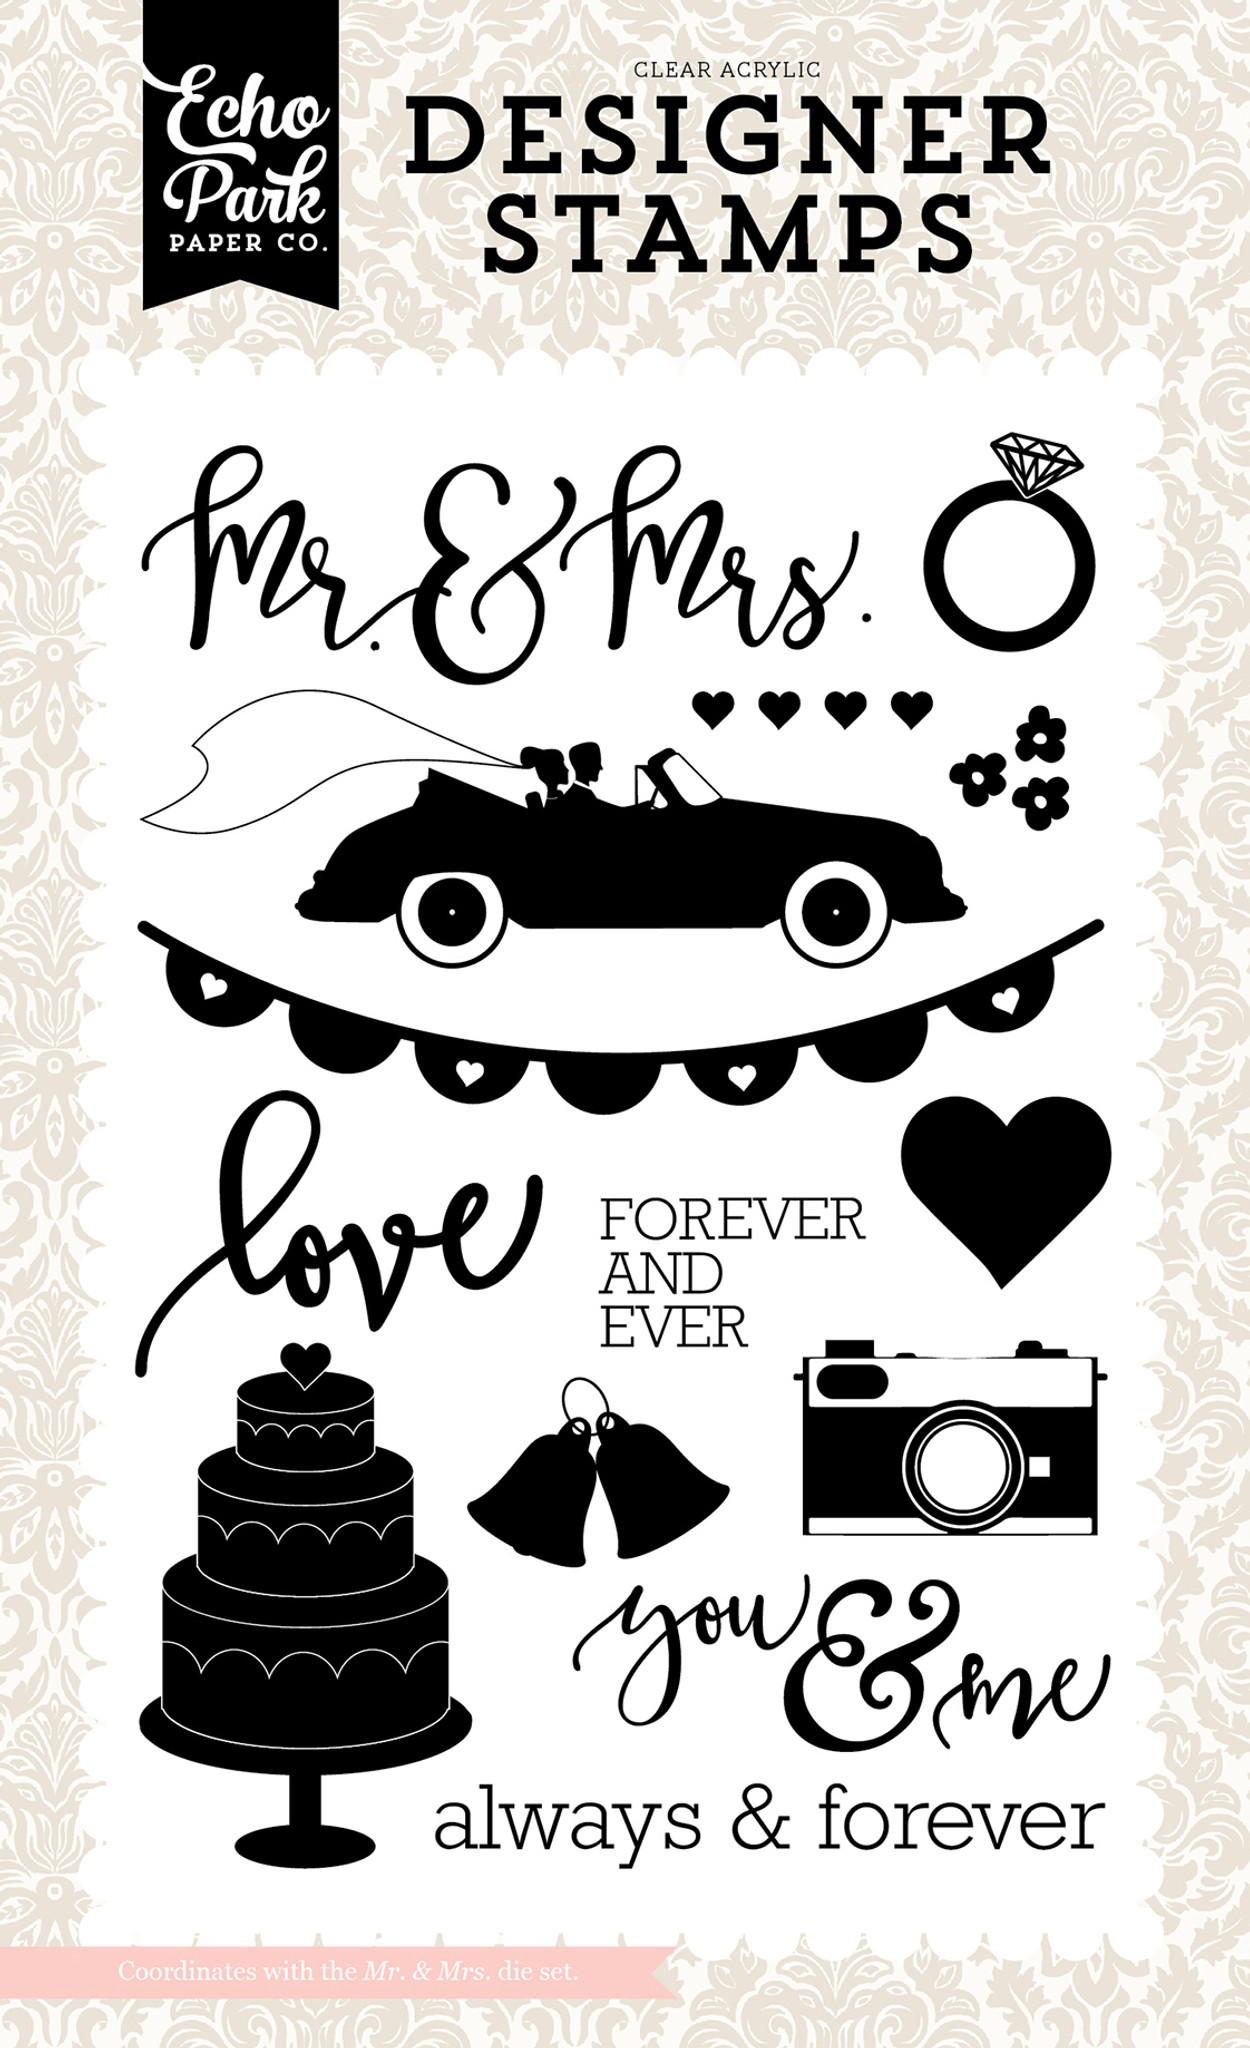 Wedding Bliss: Mr & Mrs 4x6 Stamp - Echo Park Paper Co.